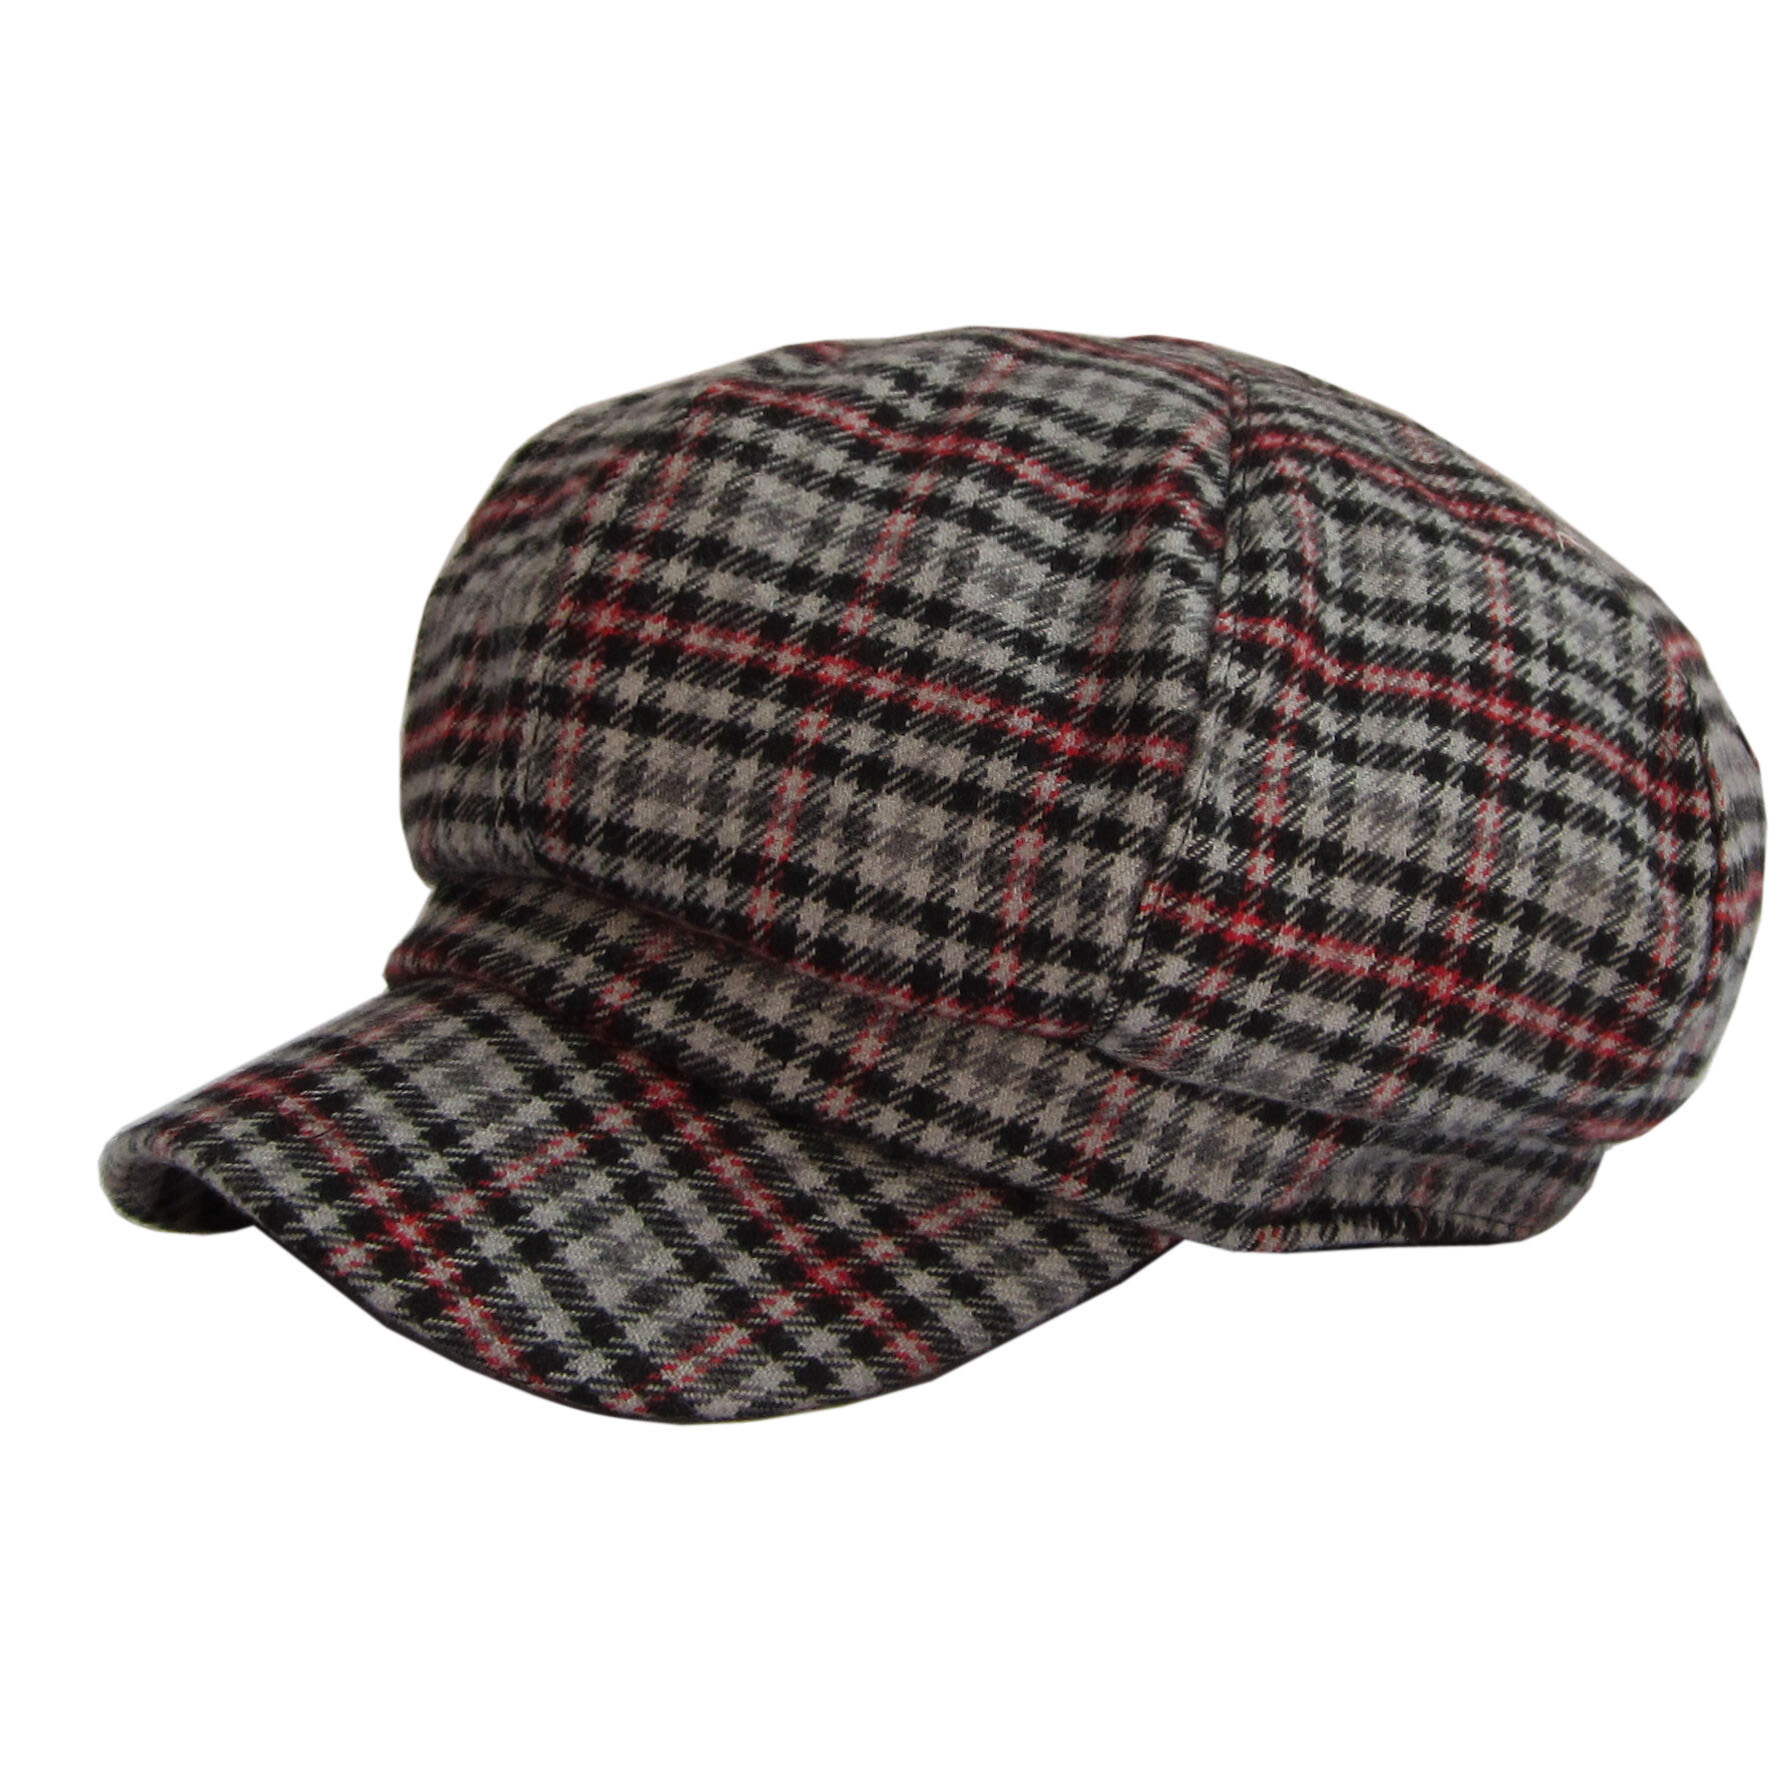 J005wa women's male spring and autumn winter woolen plaid newsboy cap painter cap octagonal hat